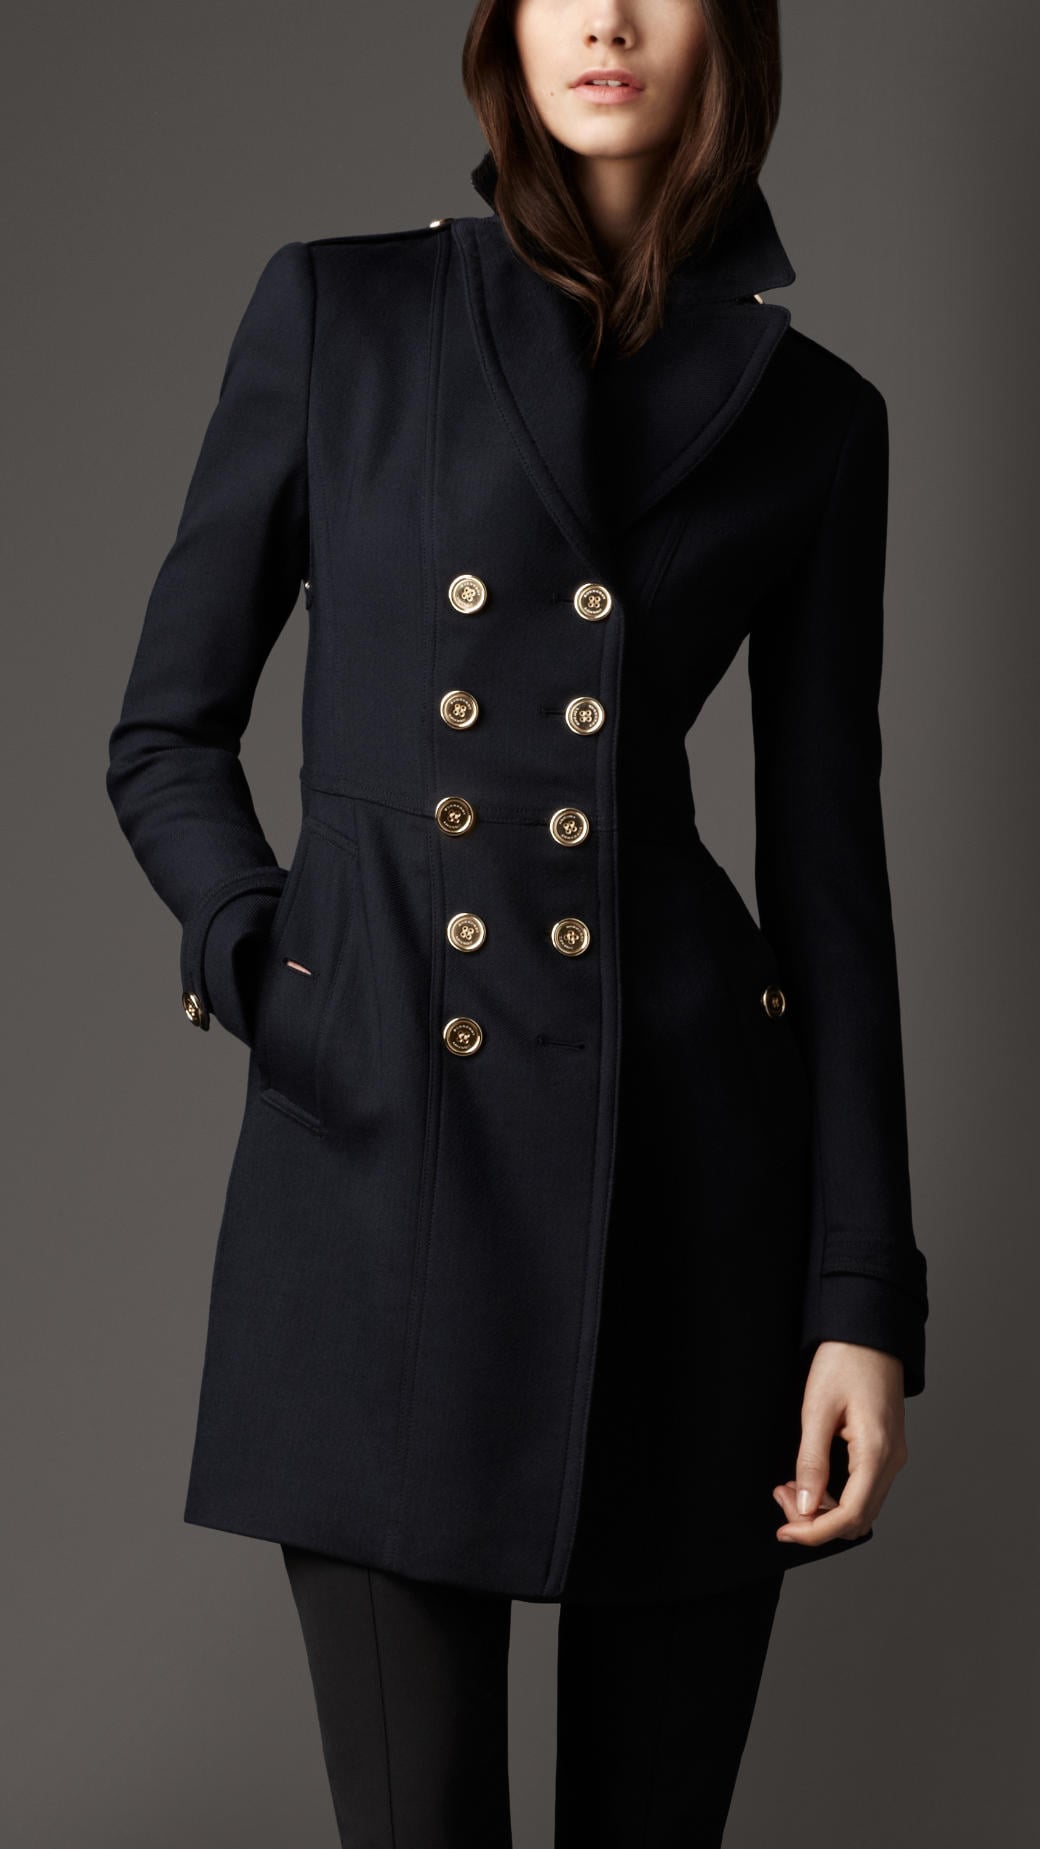 Hotkey Women's Double-Breasted Slim Solid Wool-Blend Winter Pea Coats Elegant Lapel Trench Jacket Overcoat Outwear 